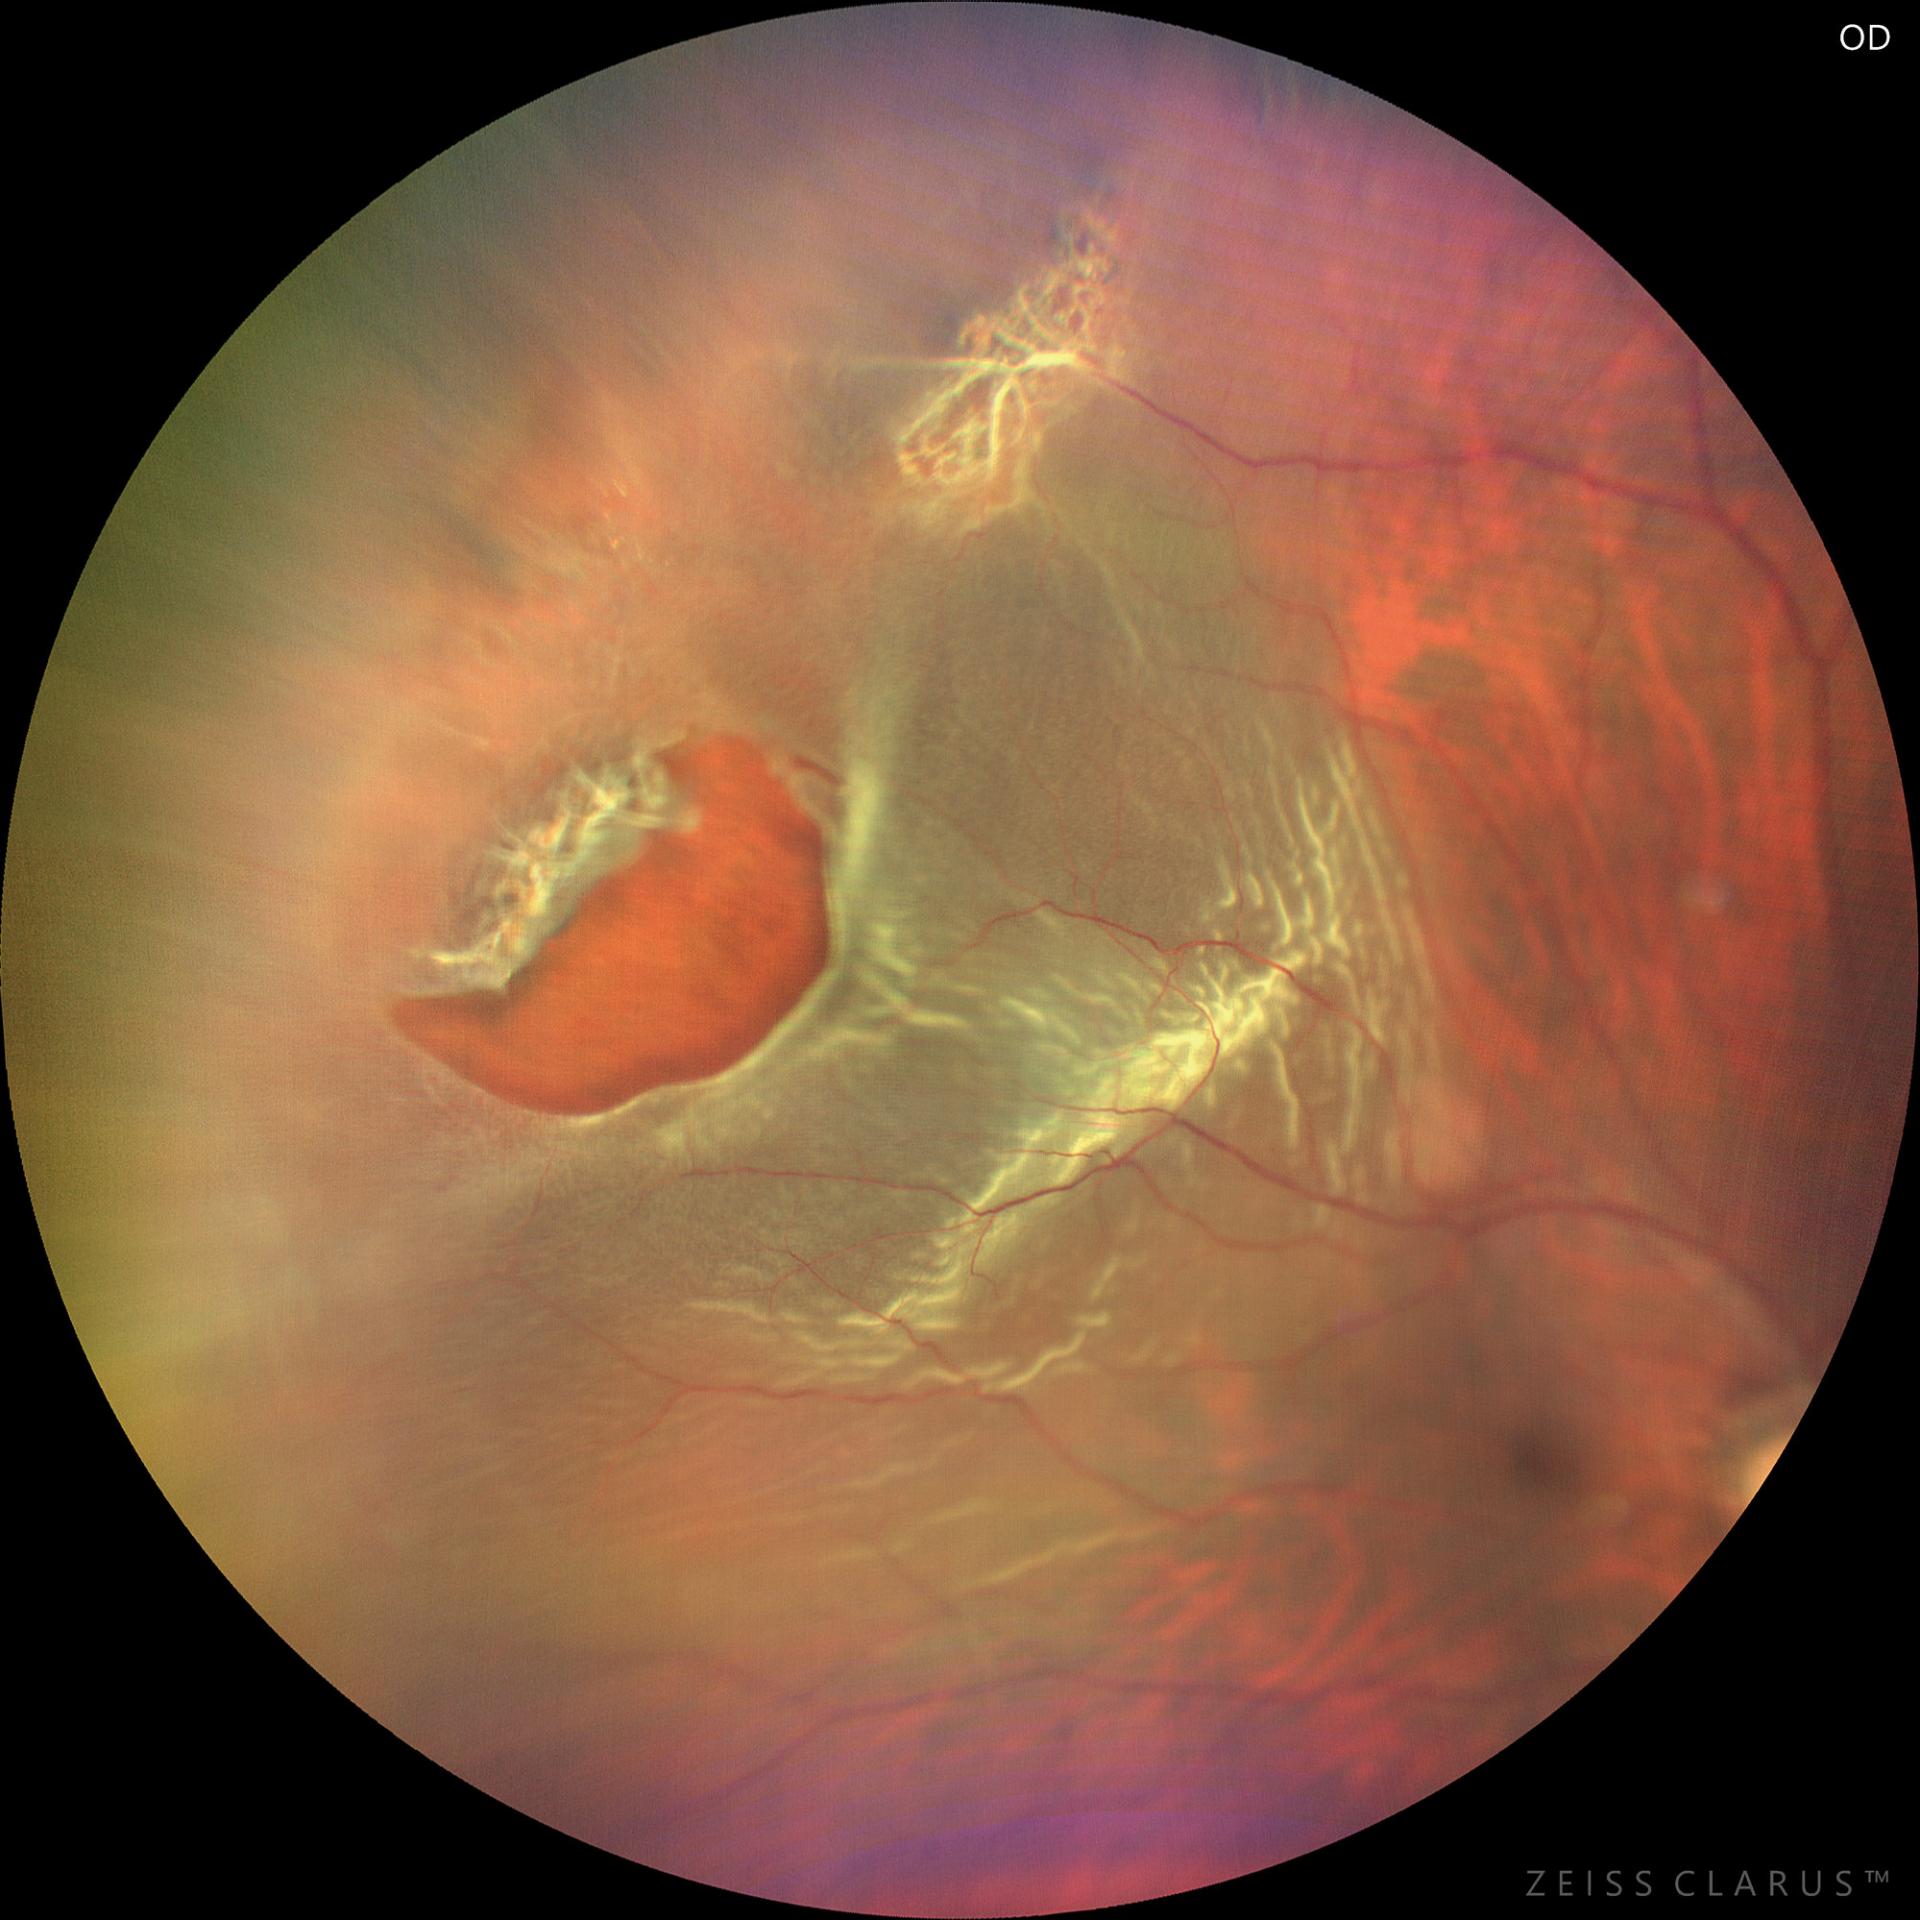 Retinal lattice degeneration and retinal tear